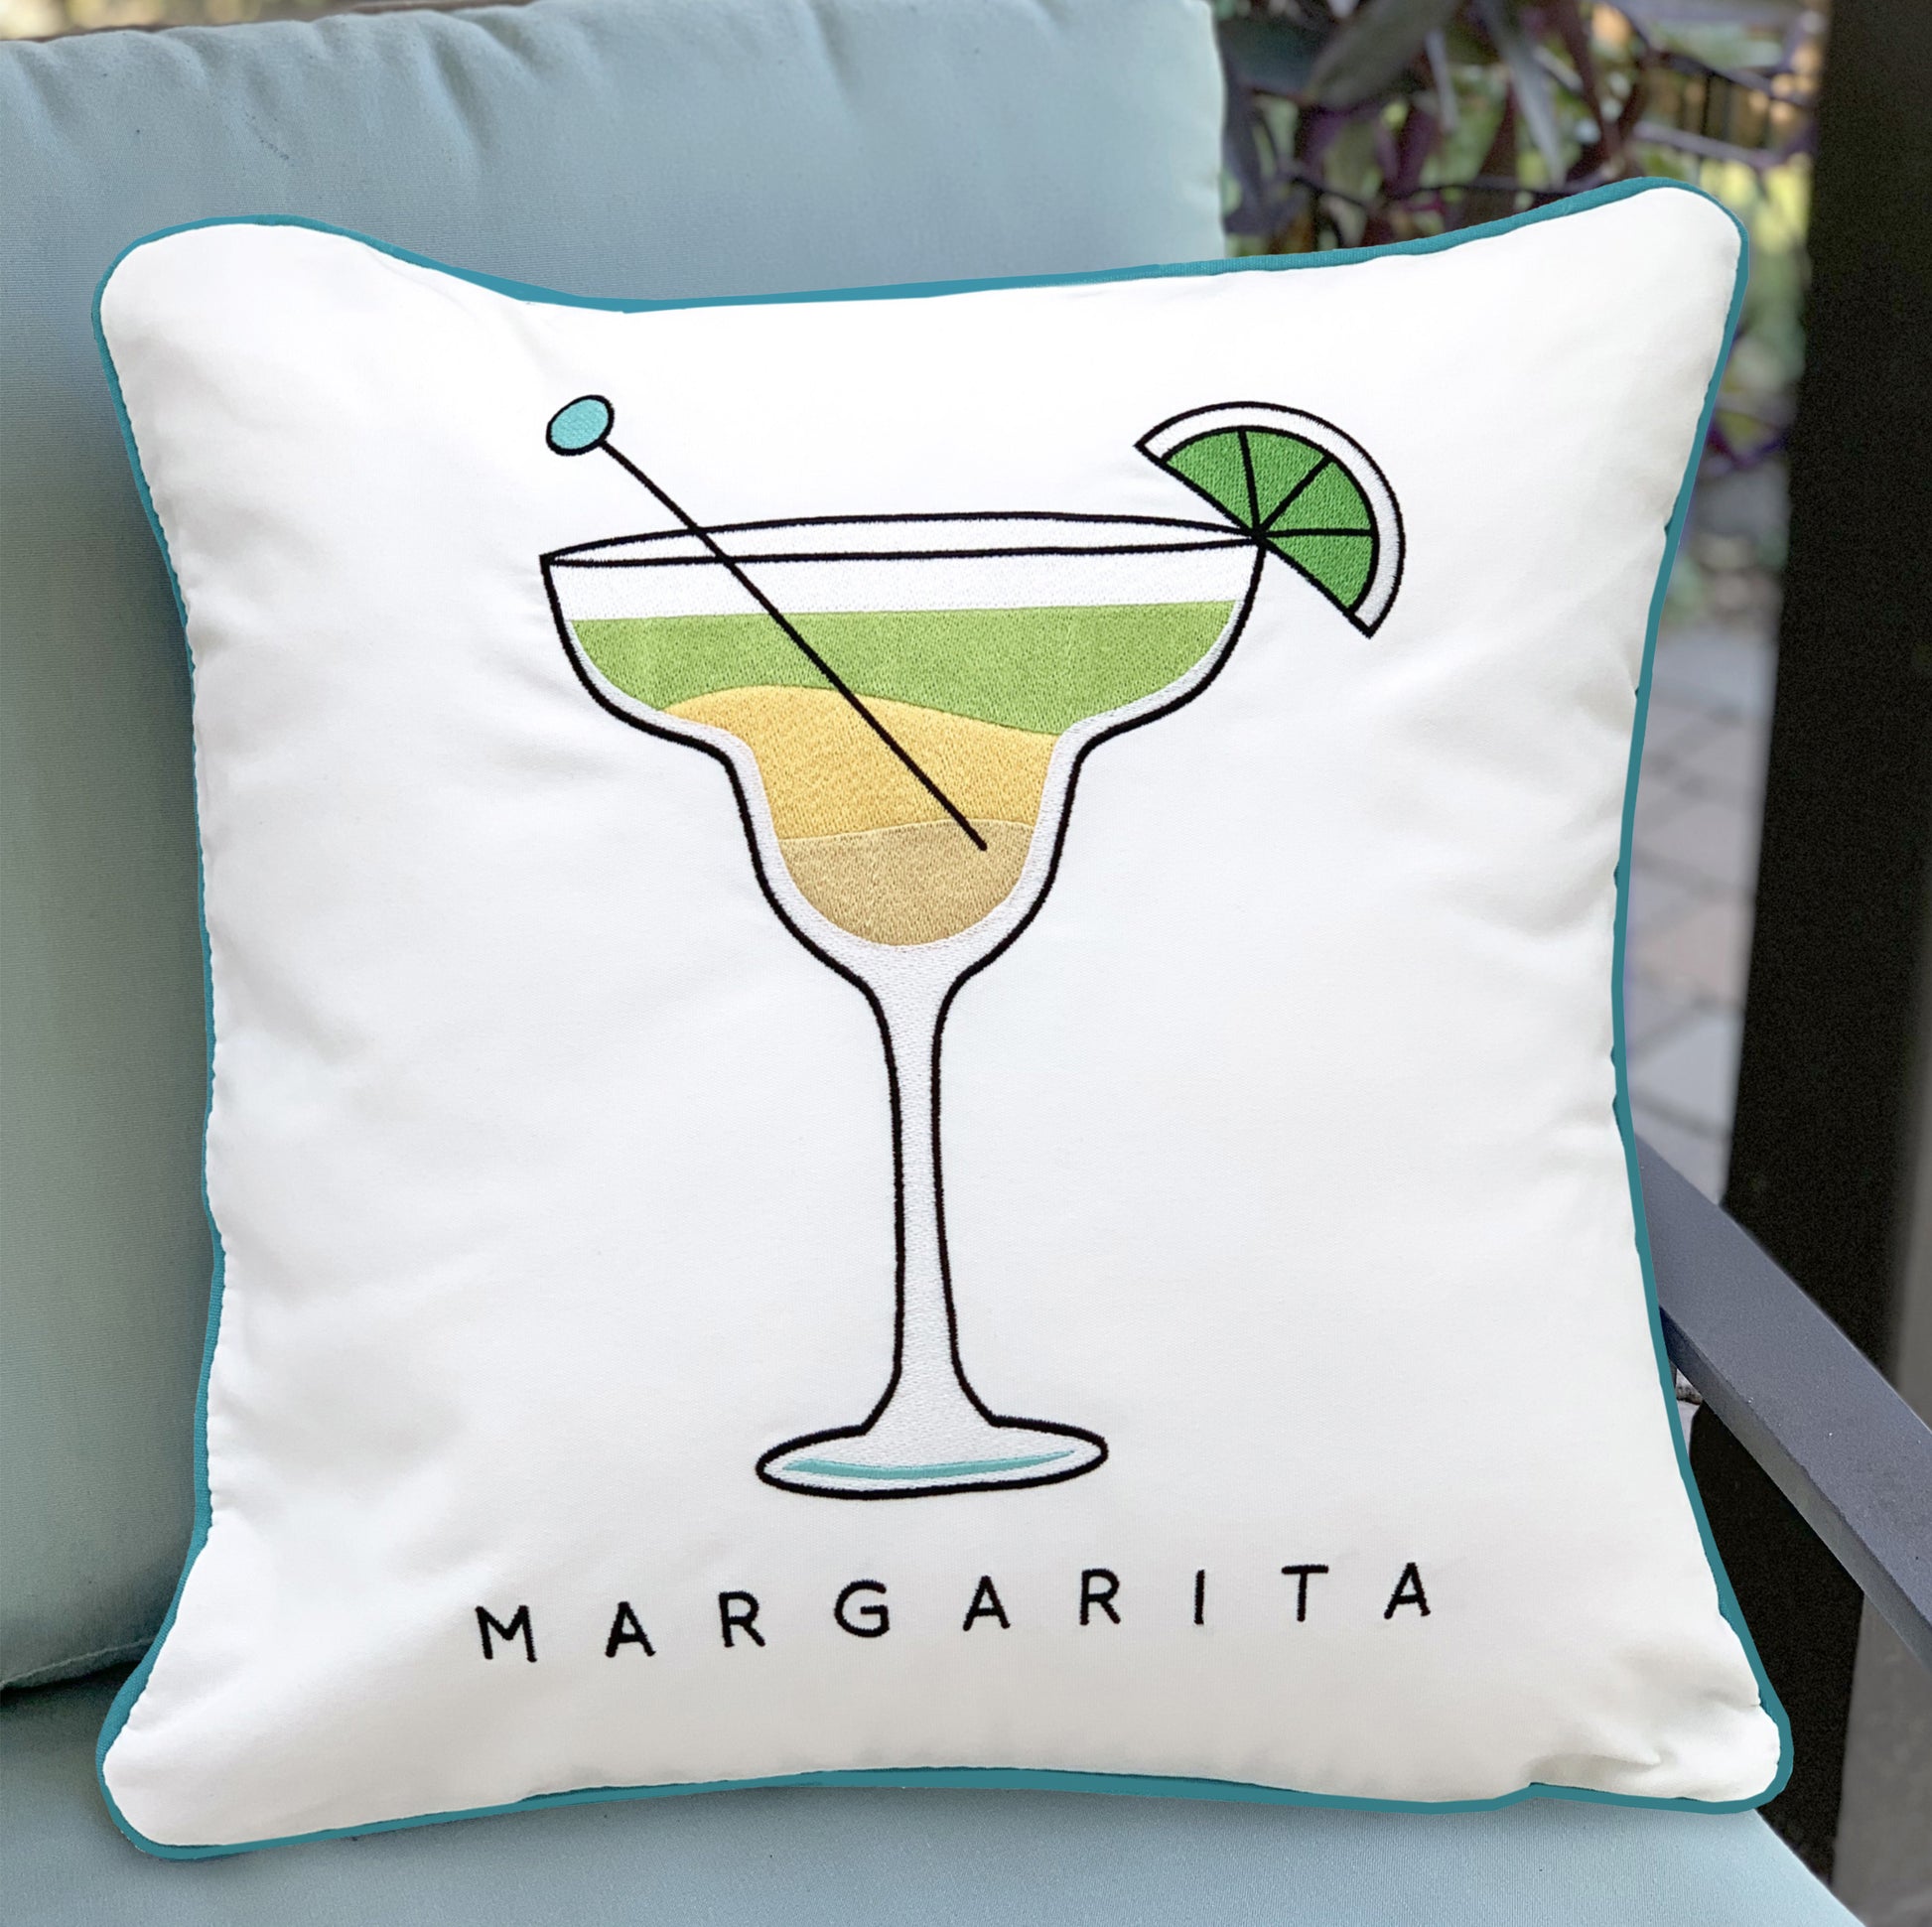 Margarita Indoor Outdoor Pillow styled on an outdoor pillow.